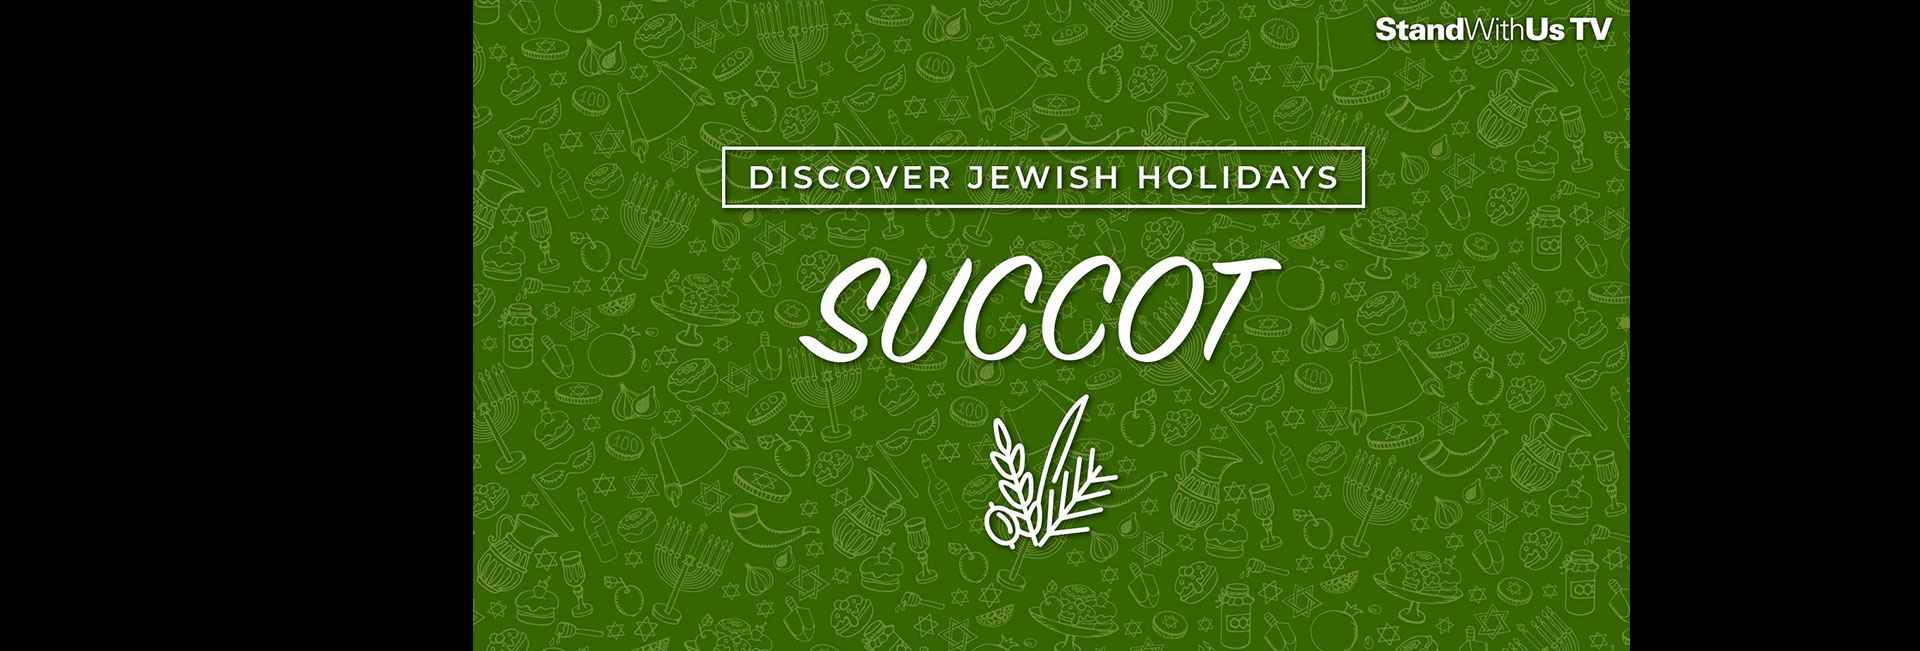 Discover Jewish Holidays: Succot